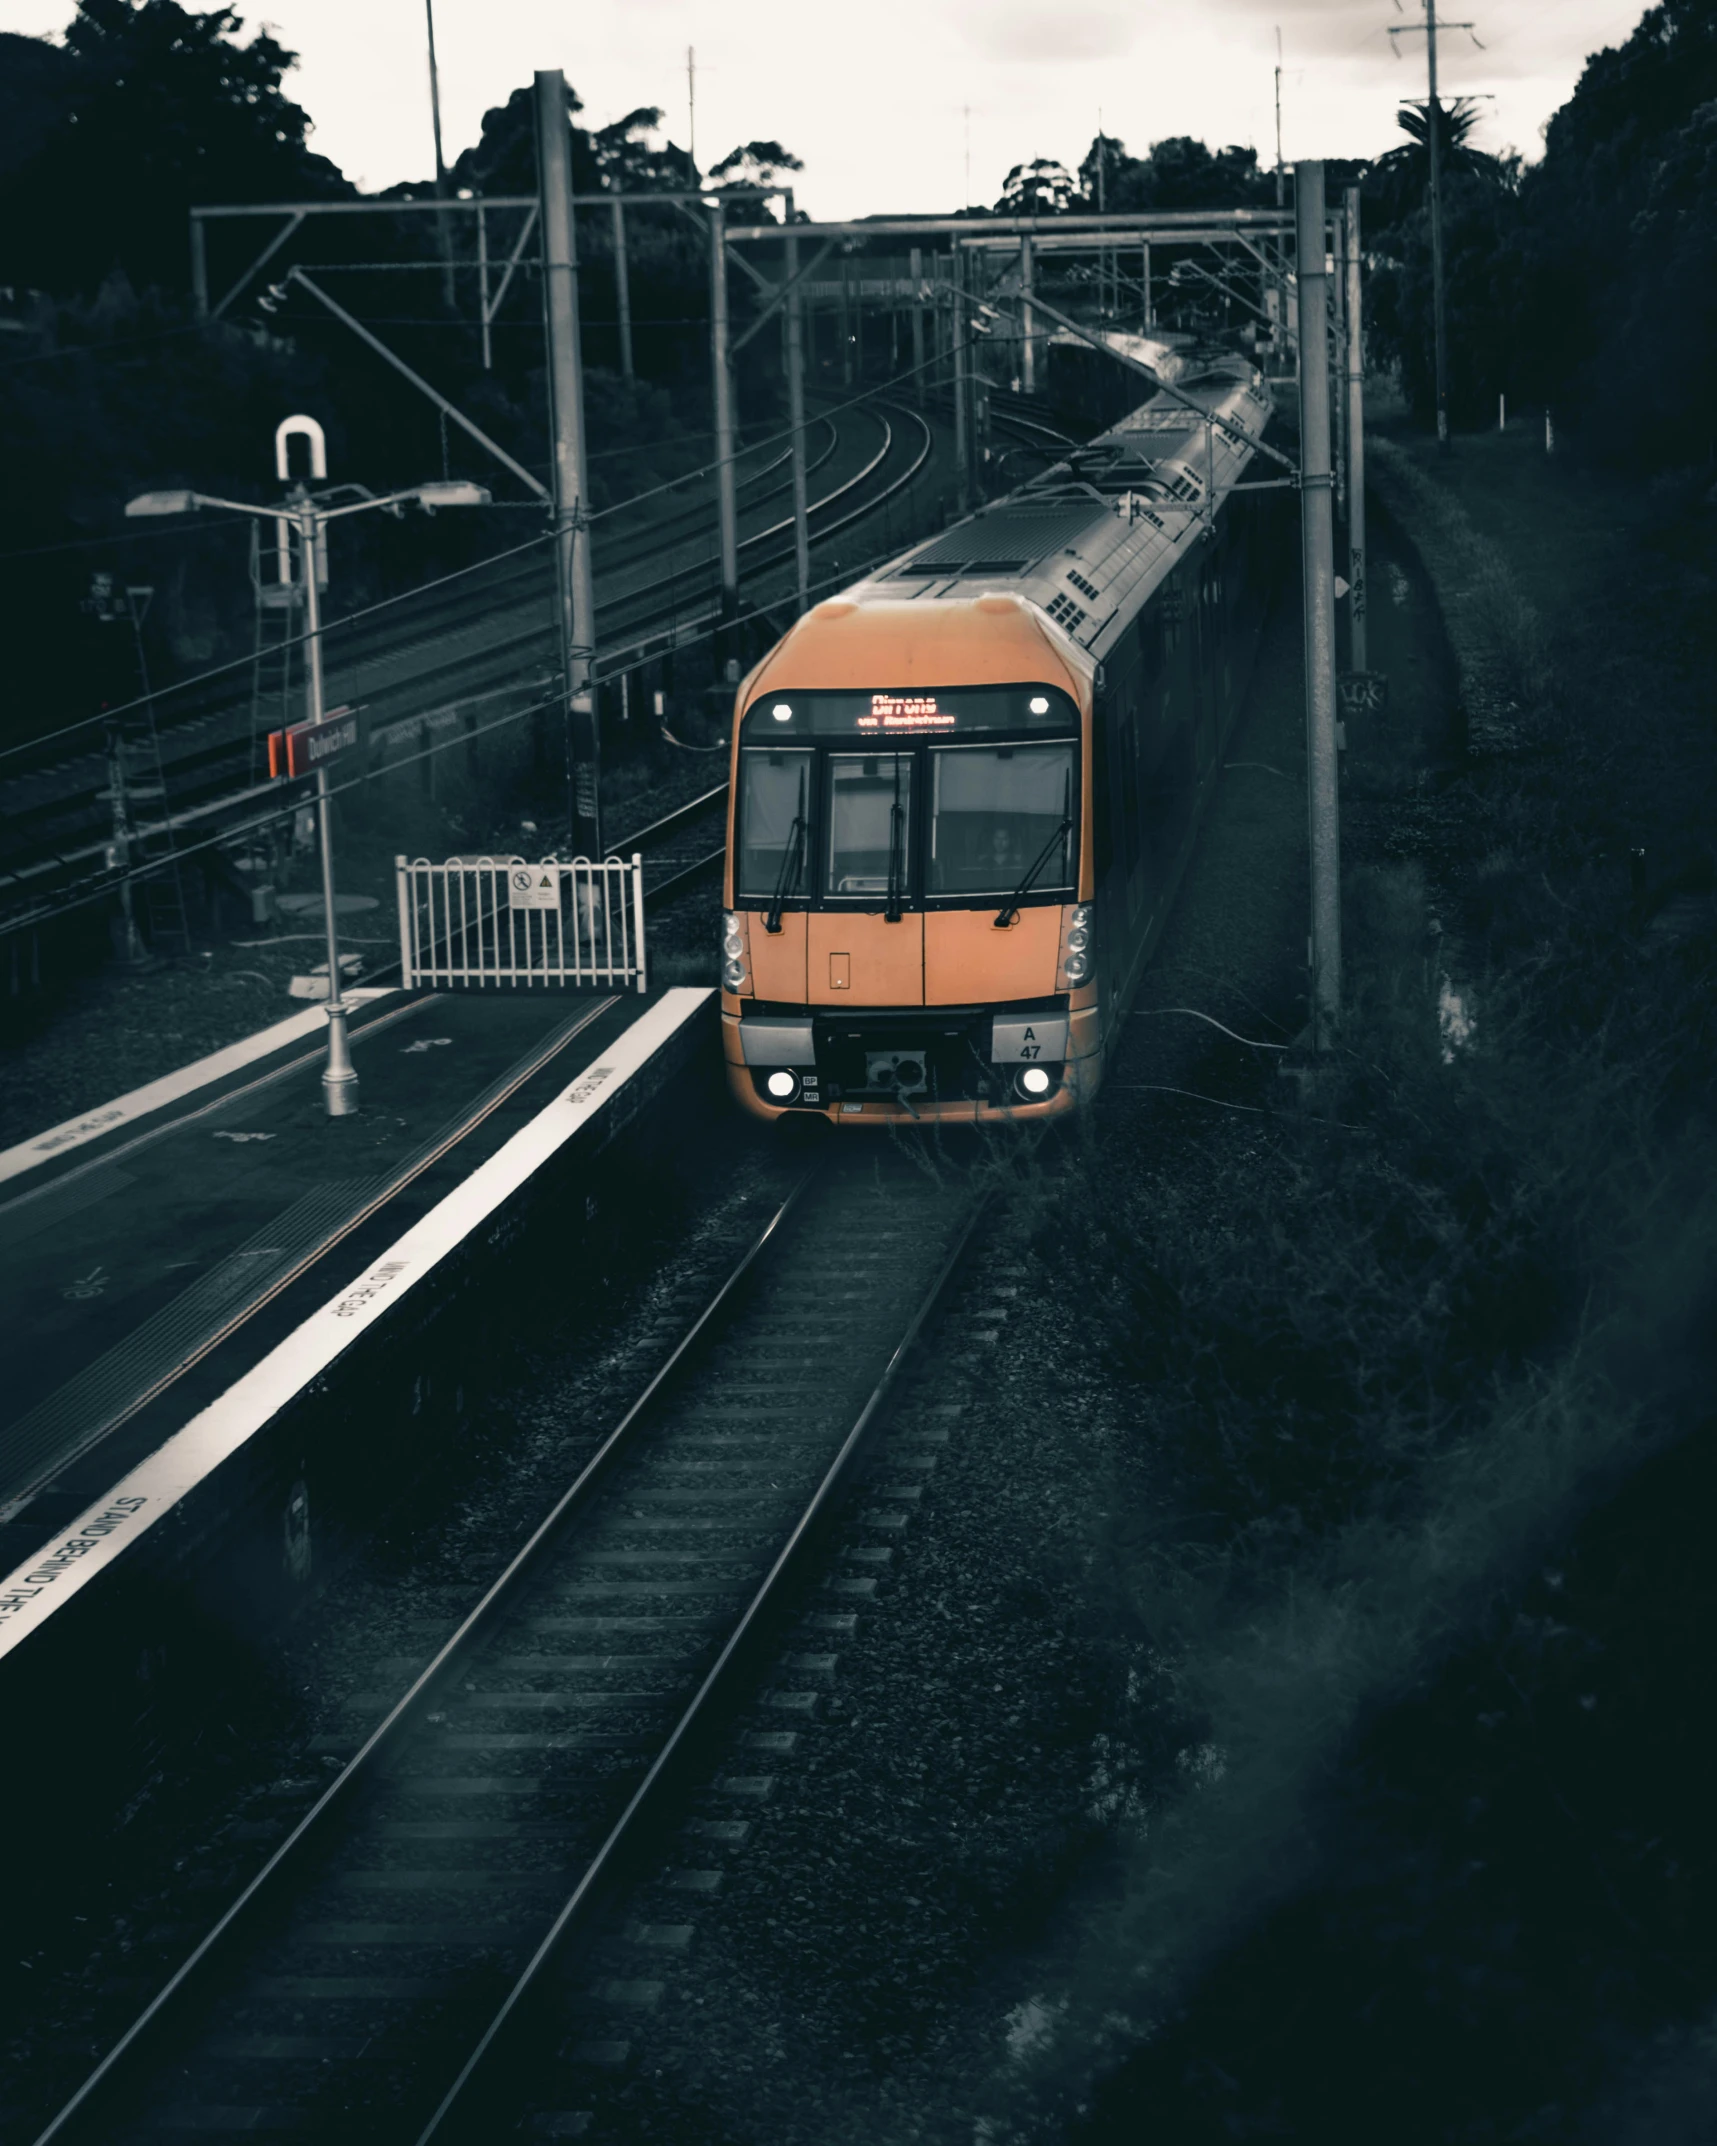 a train coming through an empty train station